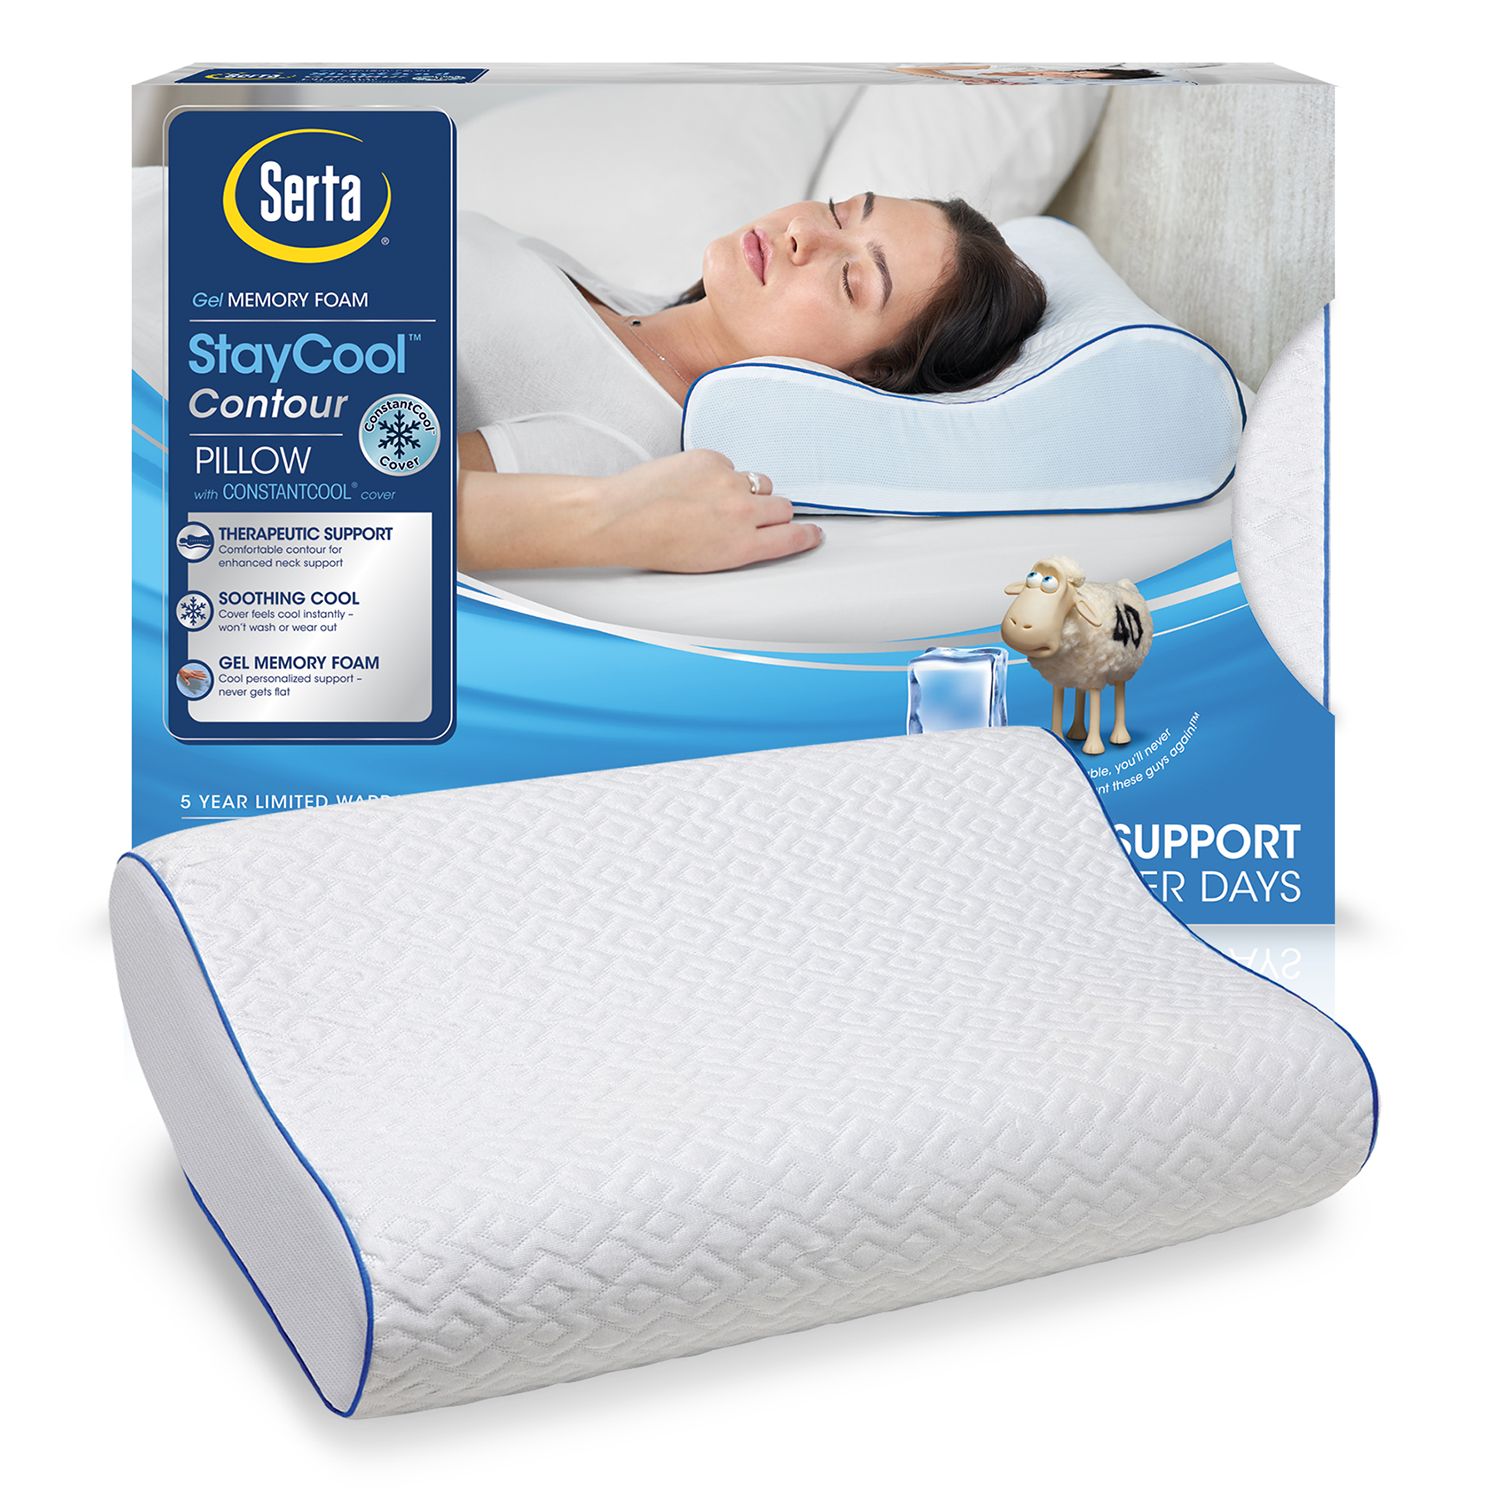 Beautyrest Contour Memory Foam Pillow Reviews Online